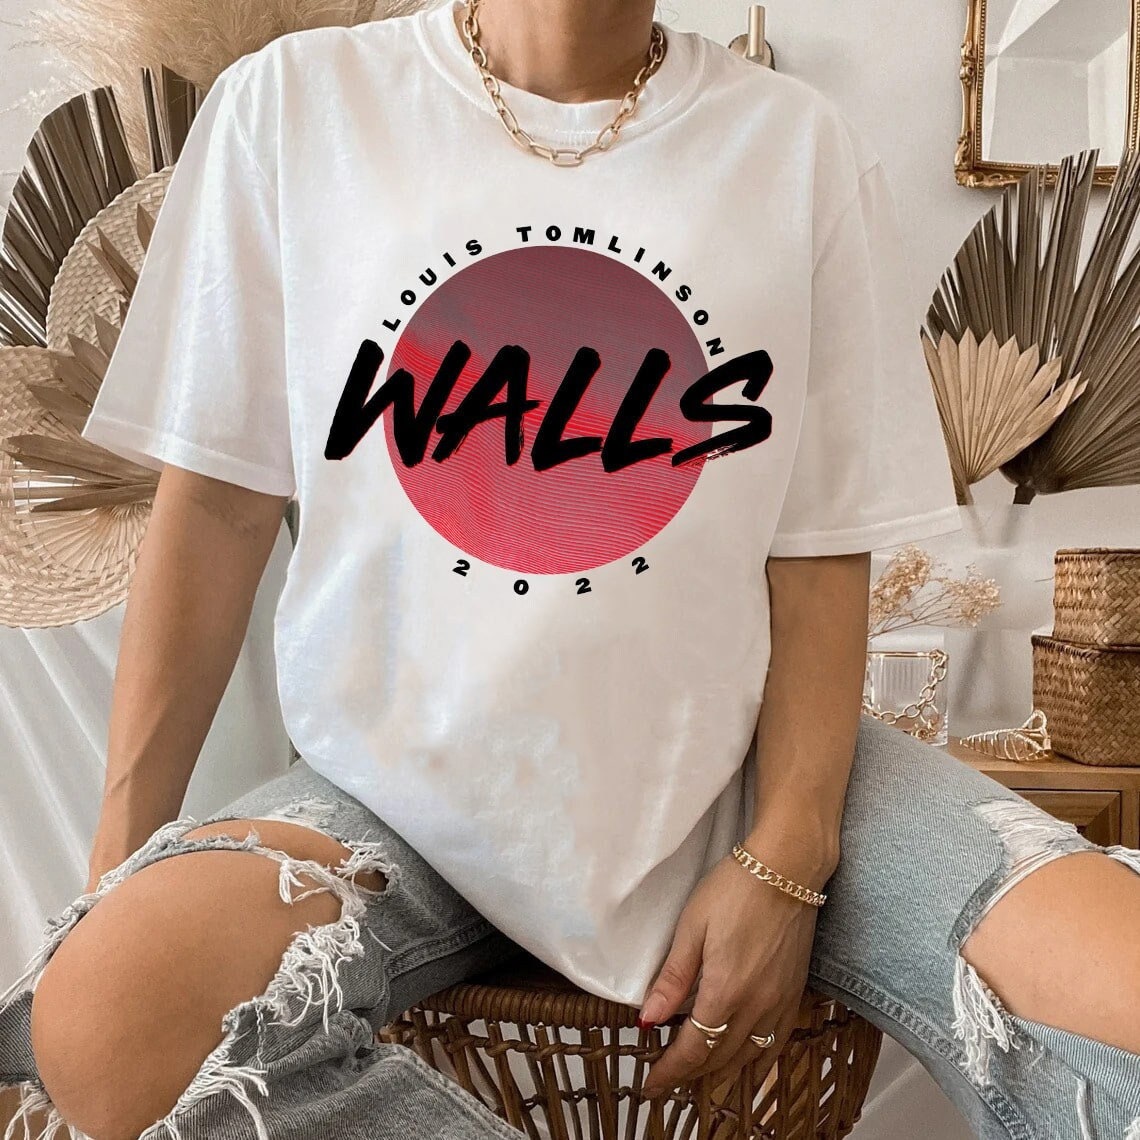 Discover Walls 2022 Shirt, Louis Tomlinson Merch